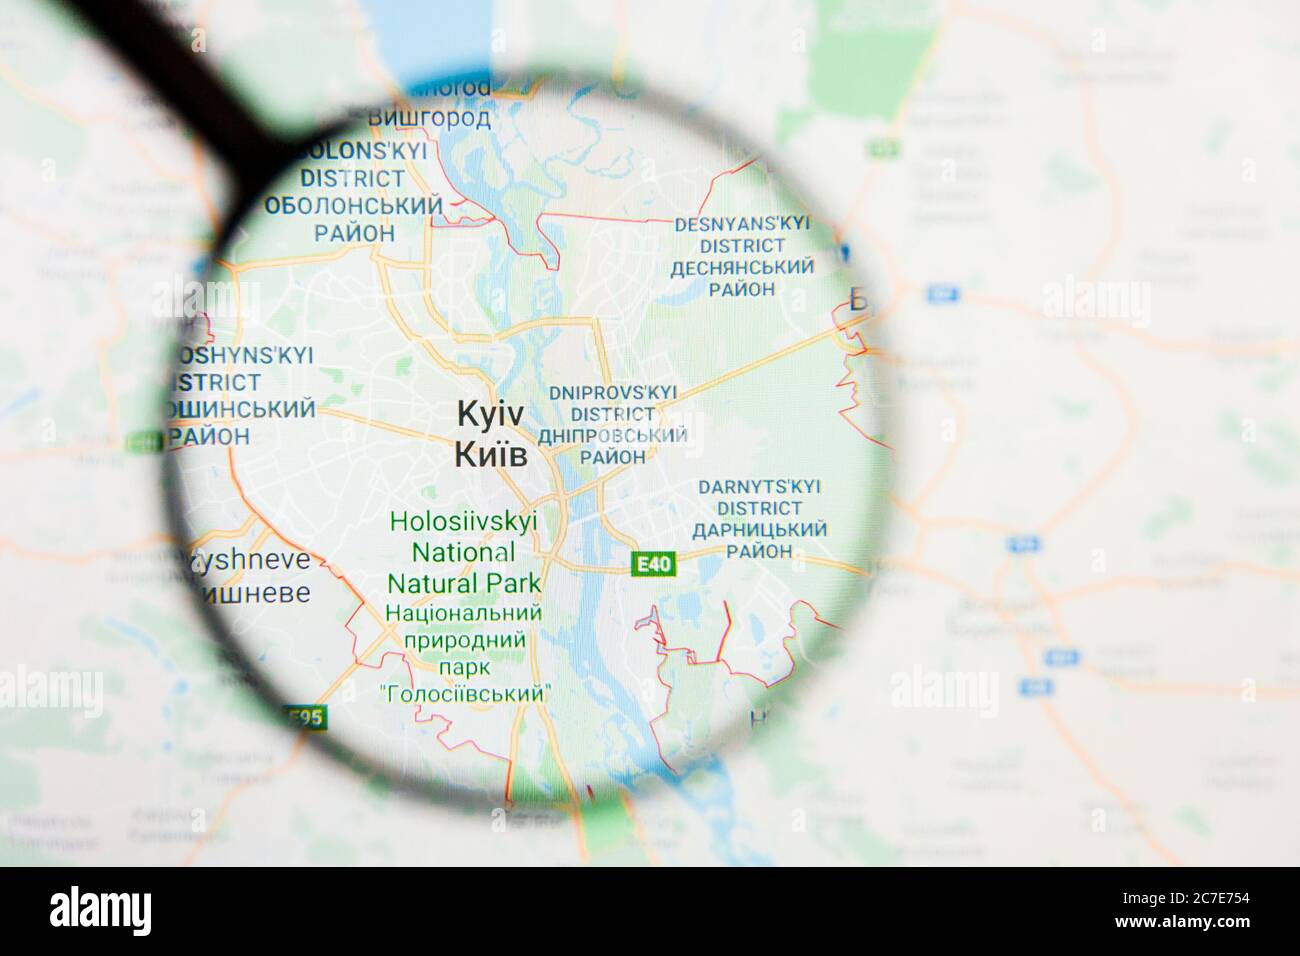 Kiev, Ukraine city visualization illustrative concept on display screen through magnifying glass Stock Photo